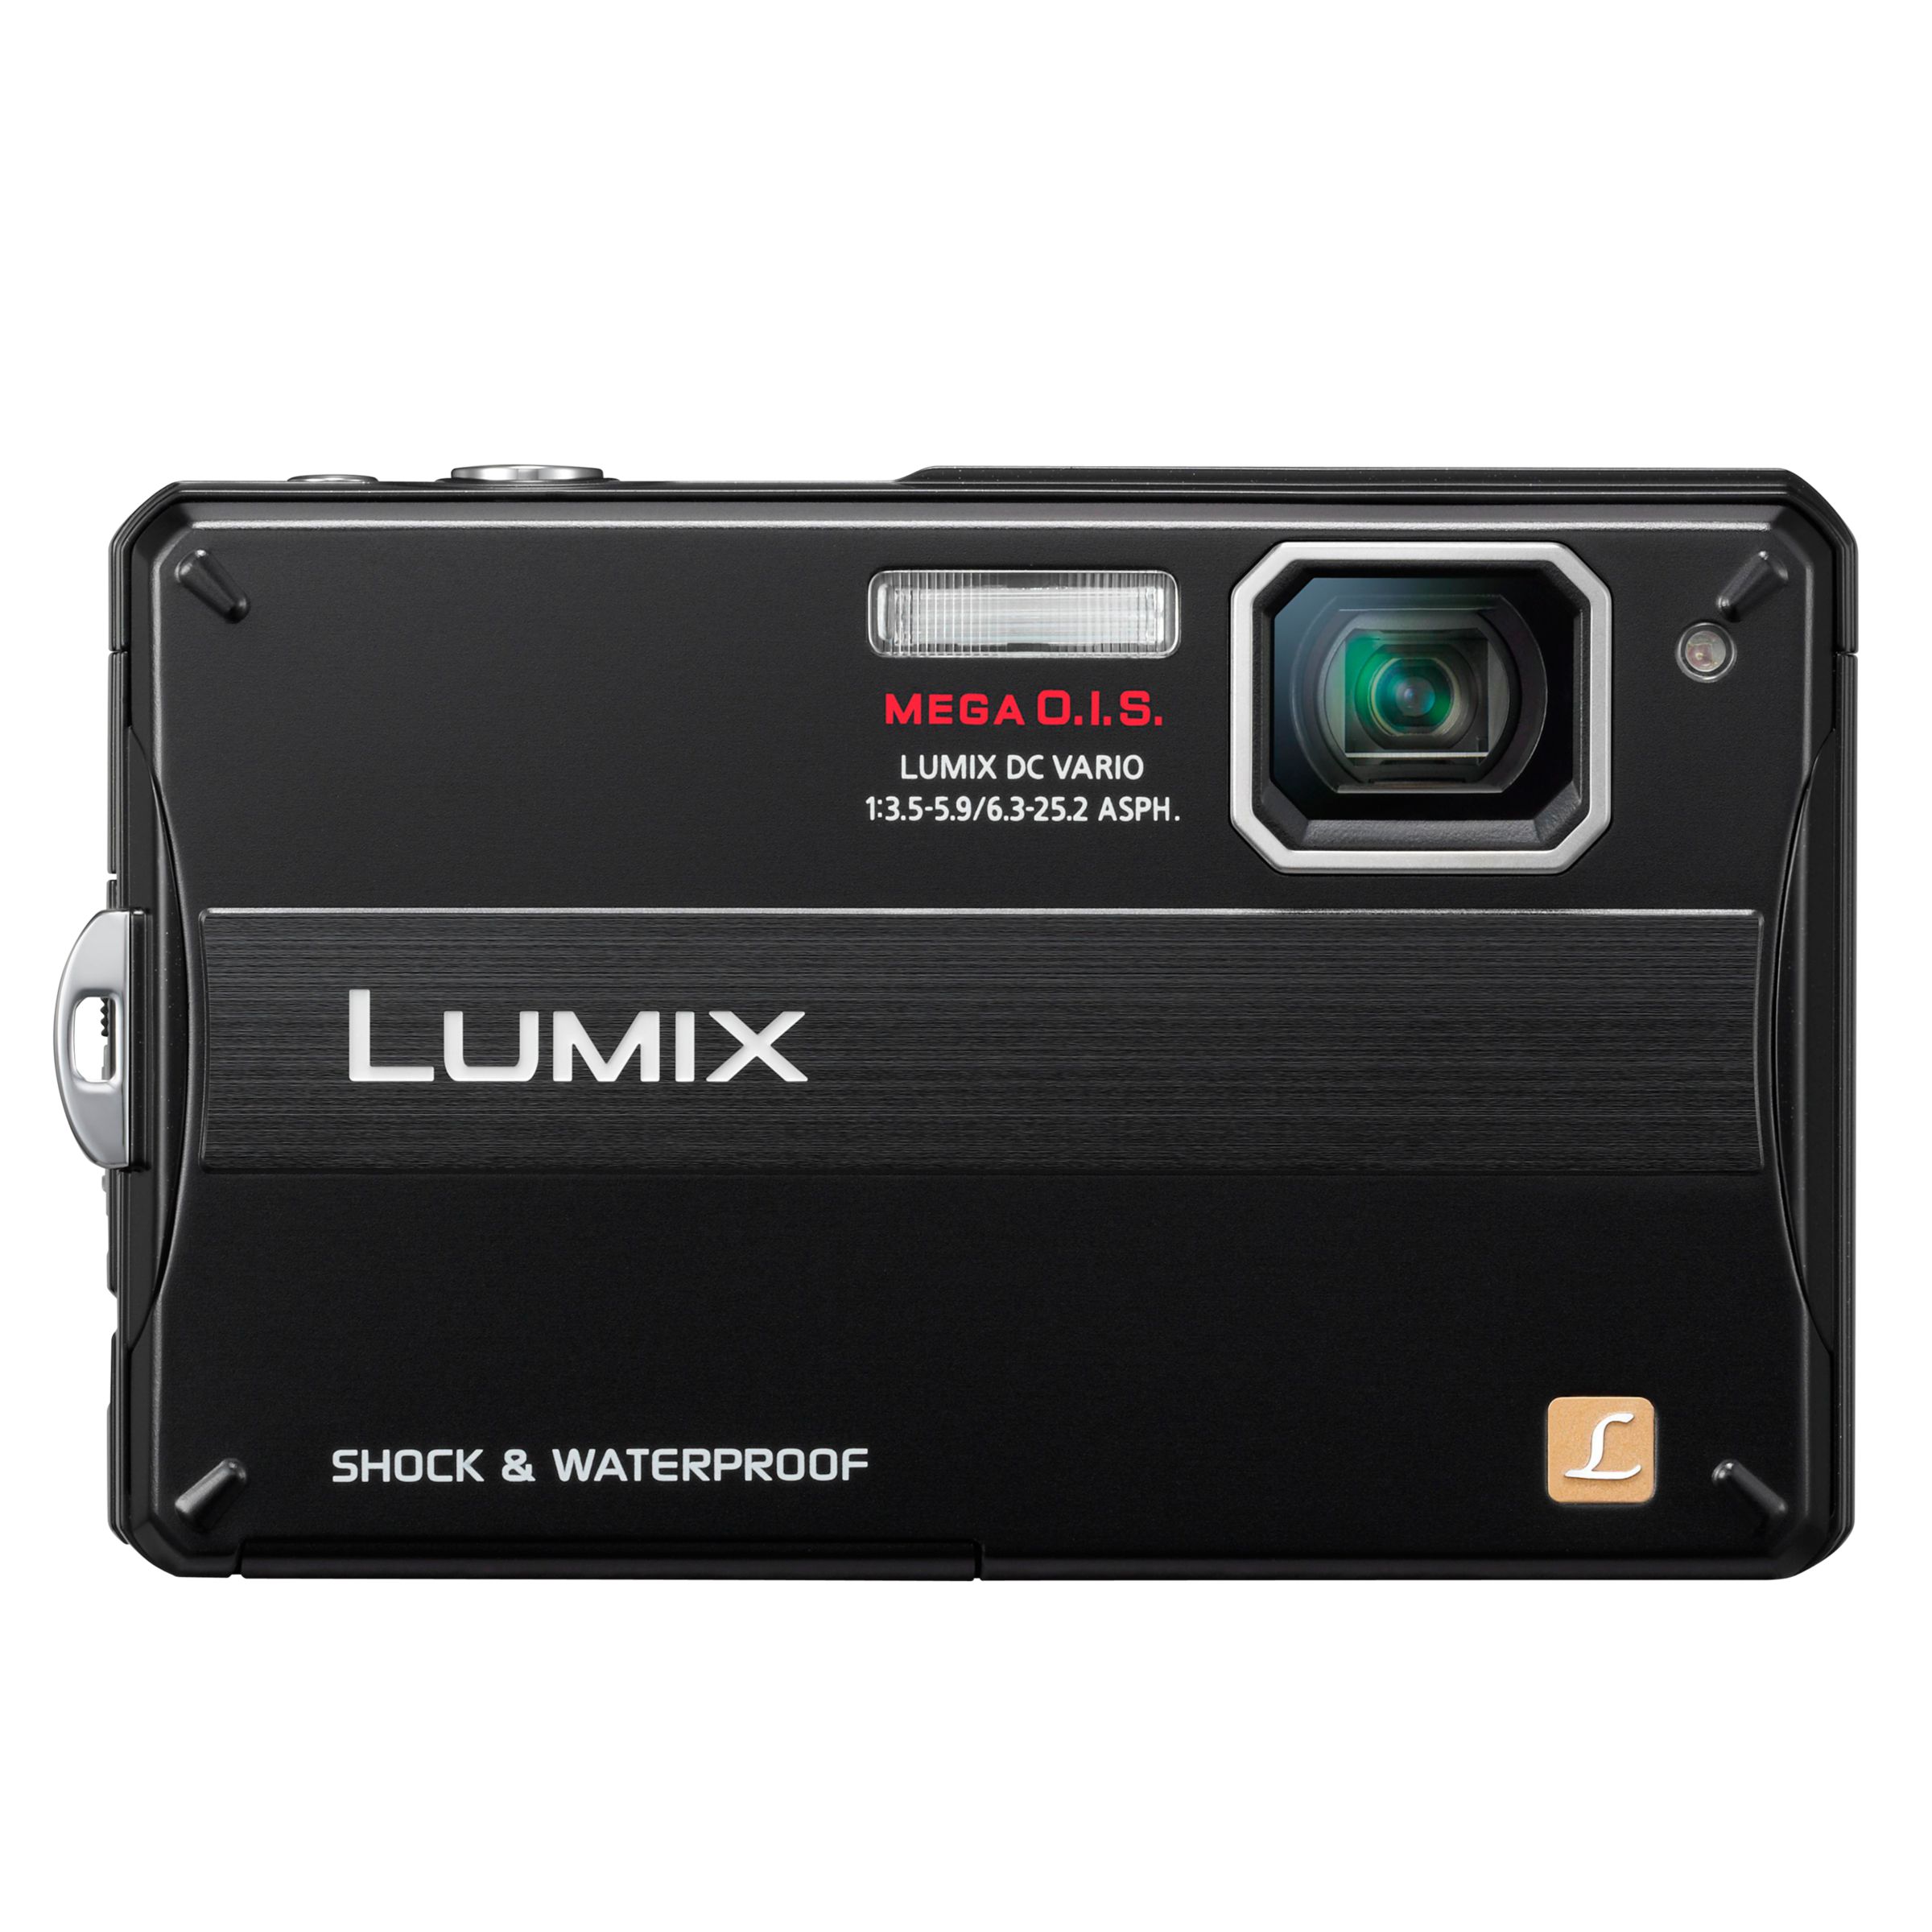 Panasonic Lumix DMC-FT10EB-K Digital Camera, Black at John Lewis